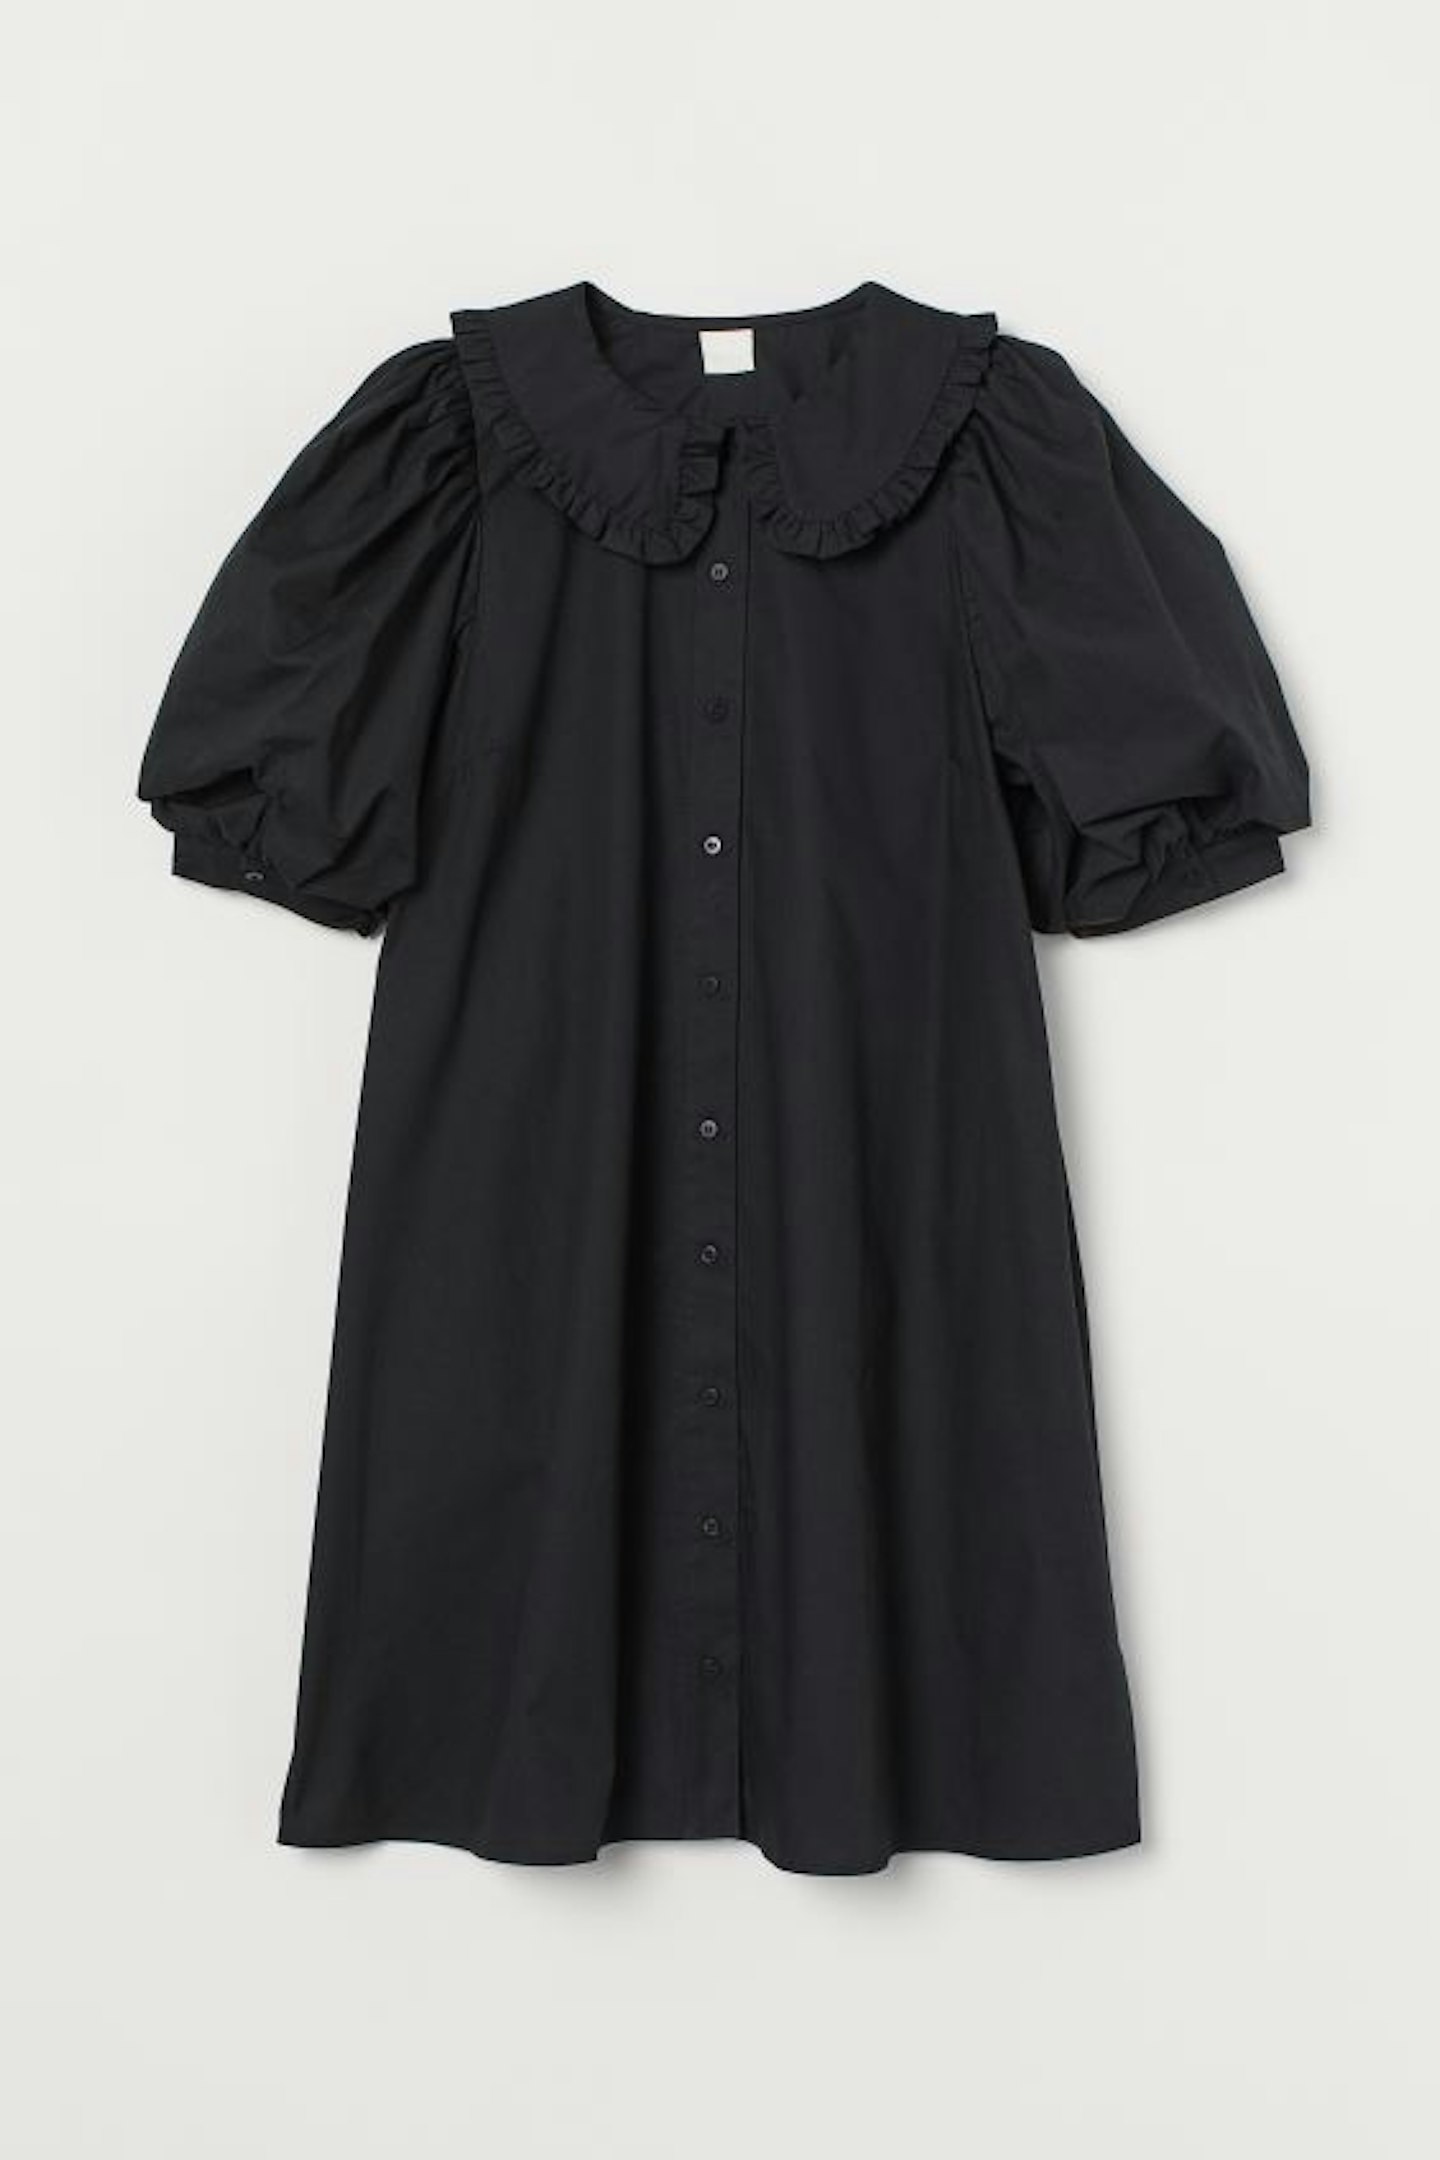 H&M, Collared dress, £24.99